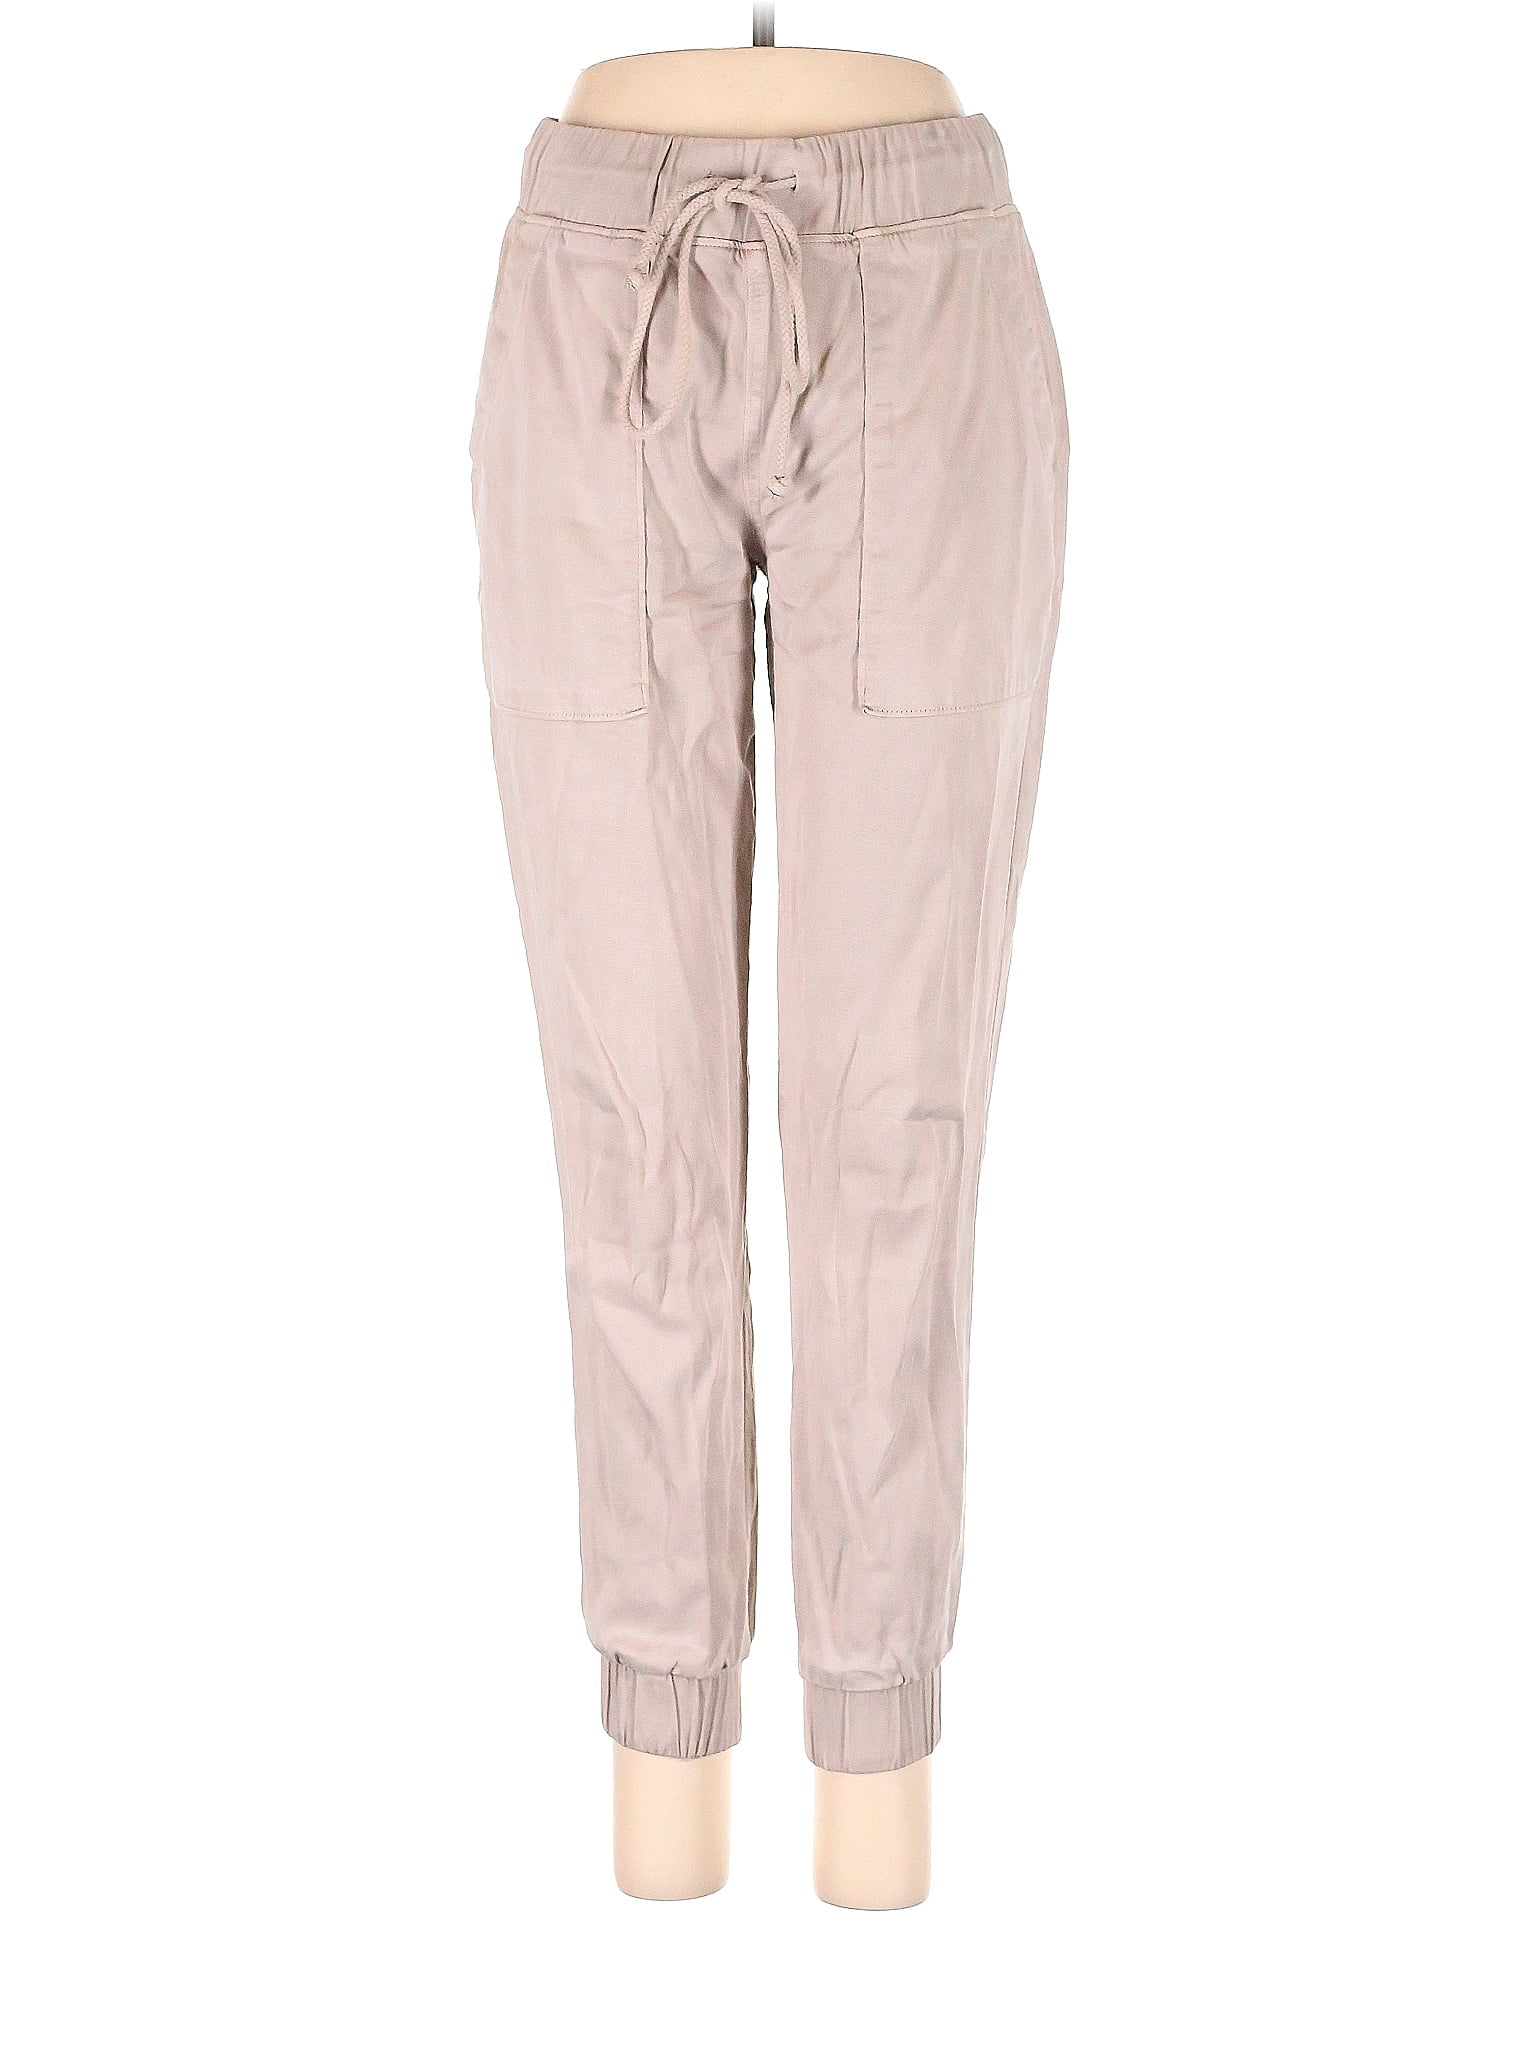 Bella Dahl Tan Casual Pants Size XS - 77% off | ThredUp